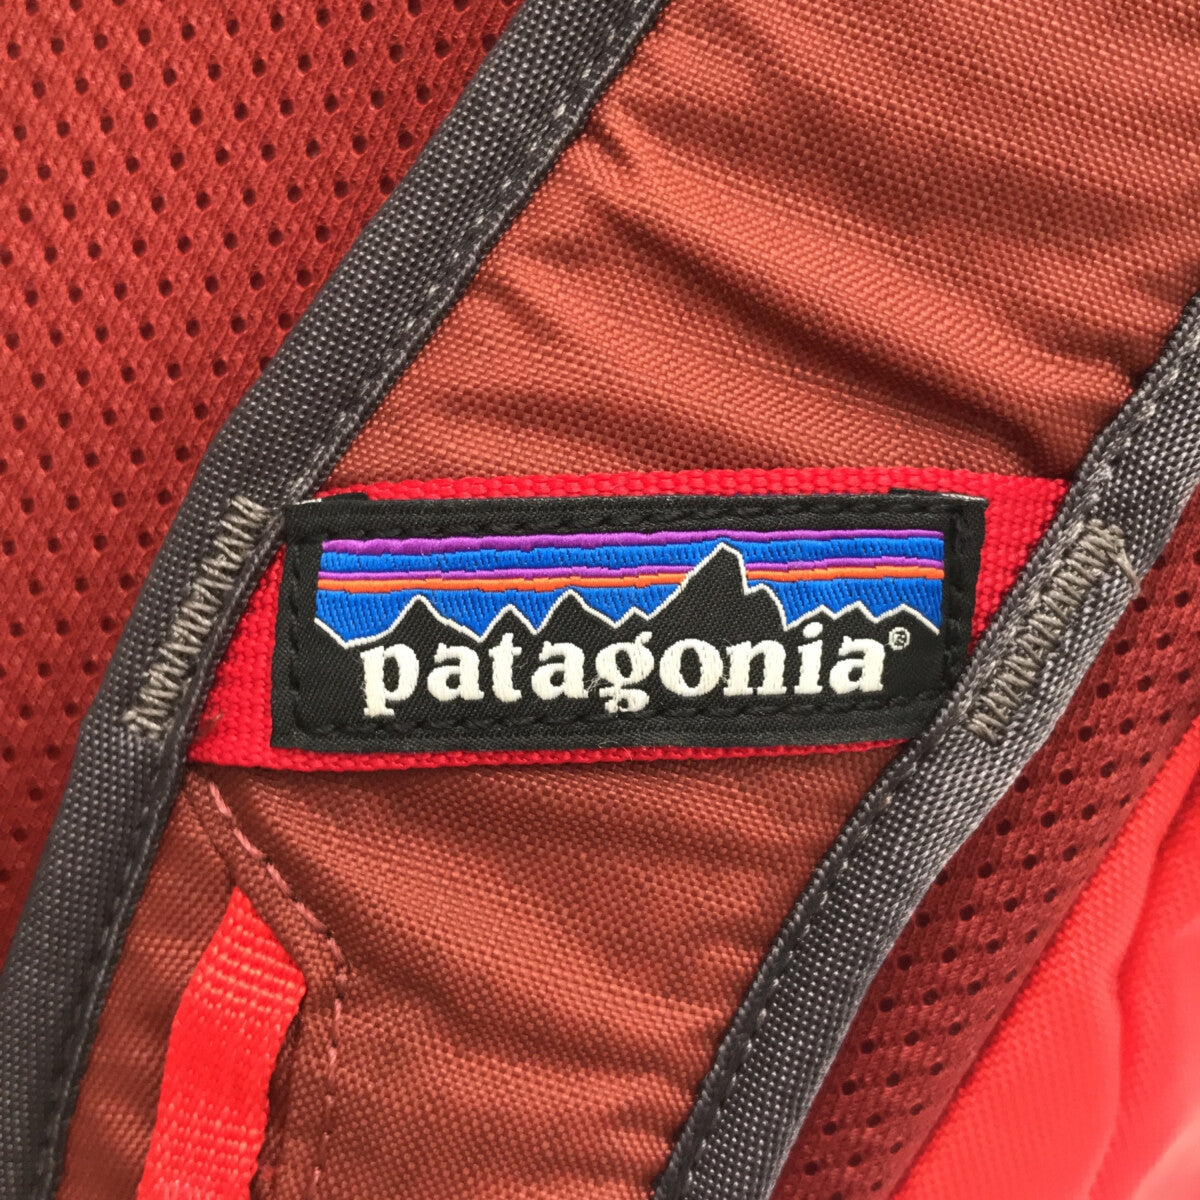 Patagonia / パタゴニア | リンクドパック ユニセックス | 16L |